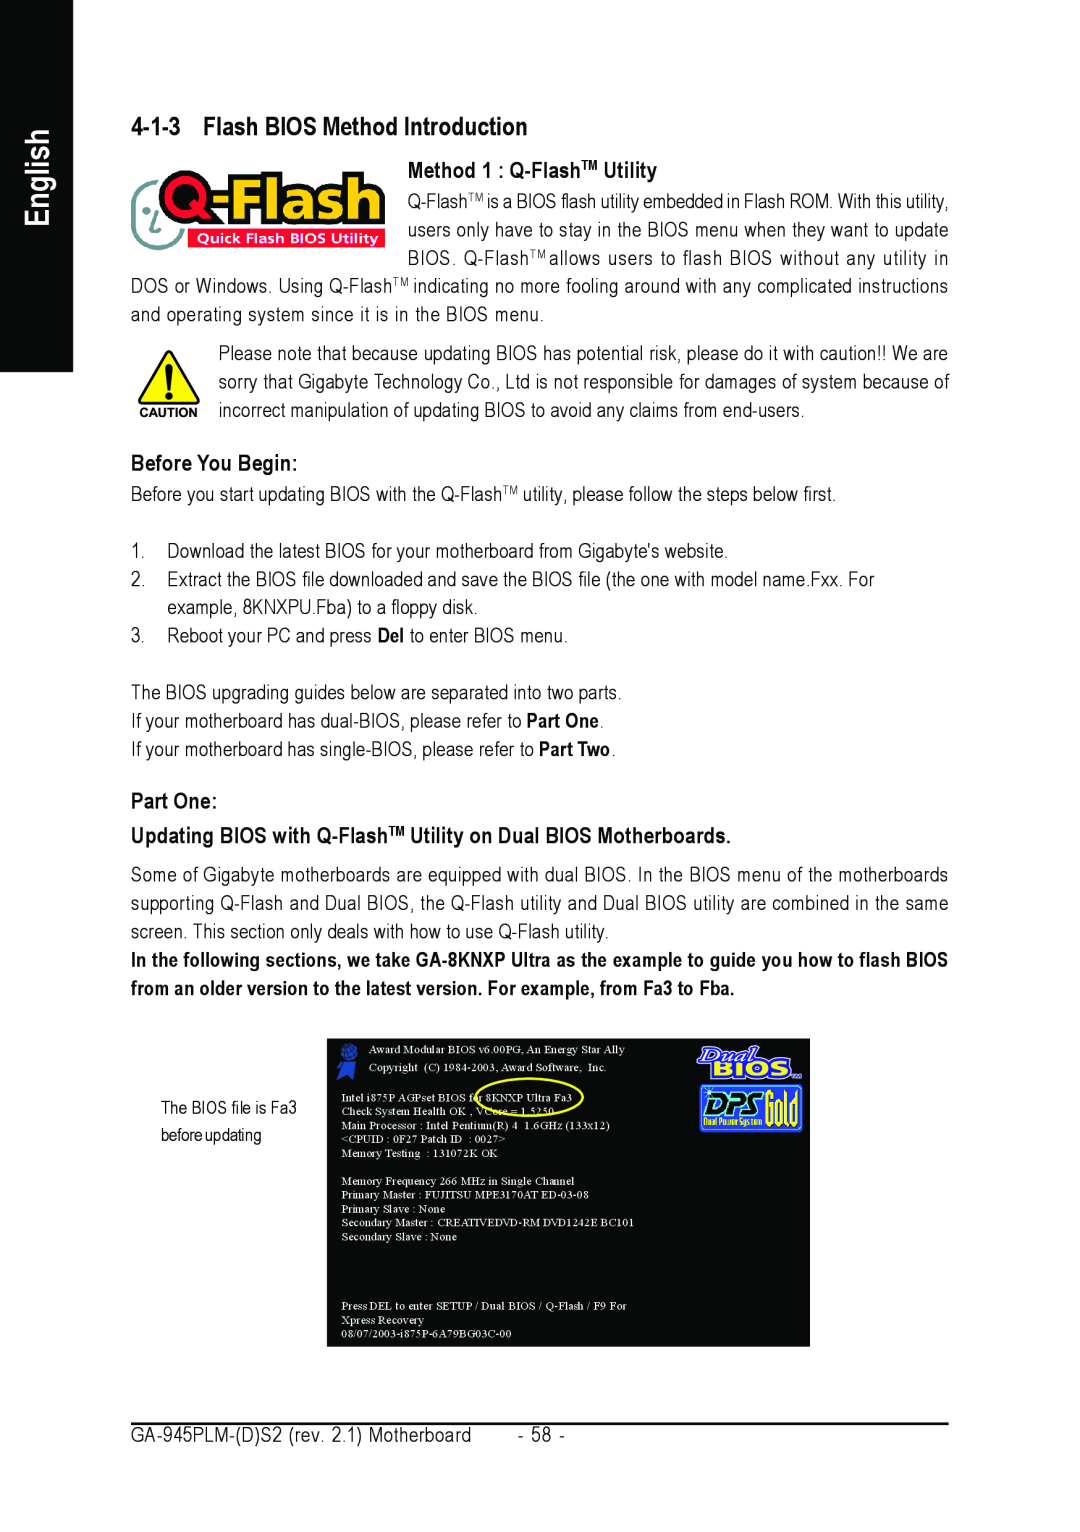 Gigabyte GA-945PLM-(D)S2 Flash BIOS Method Introduction, Method 1 Q-FlashTM Utility, Before You Begin, Part One, English 